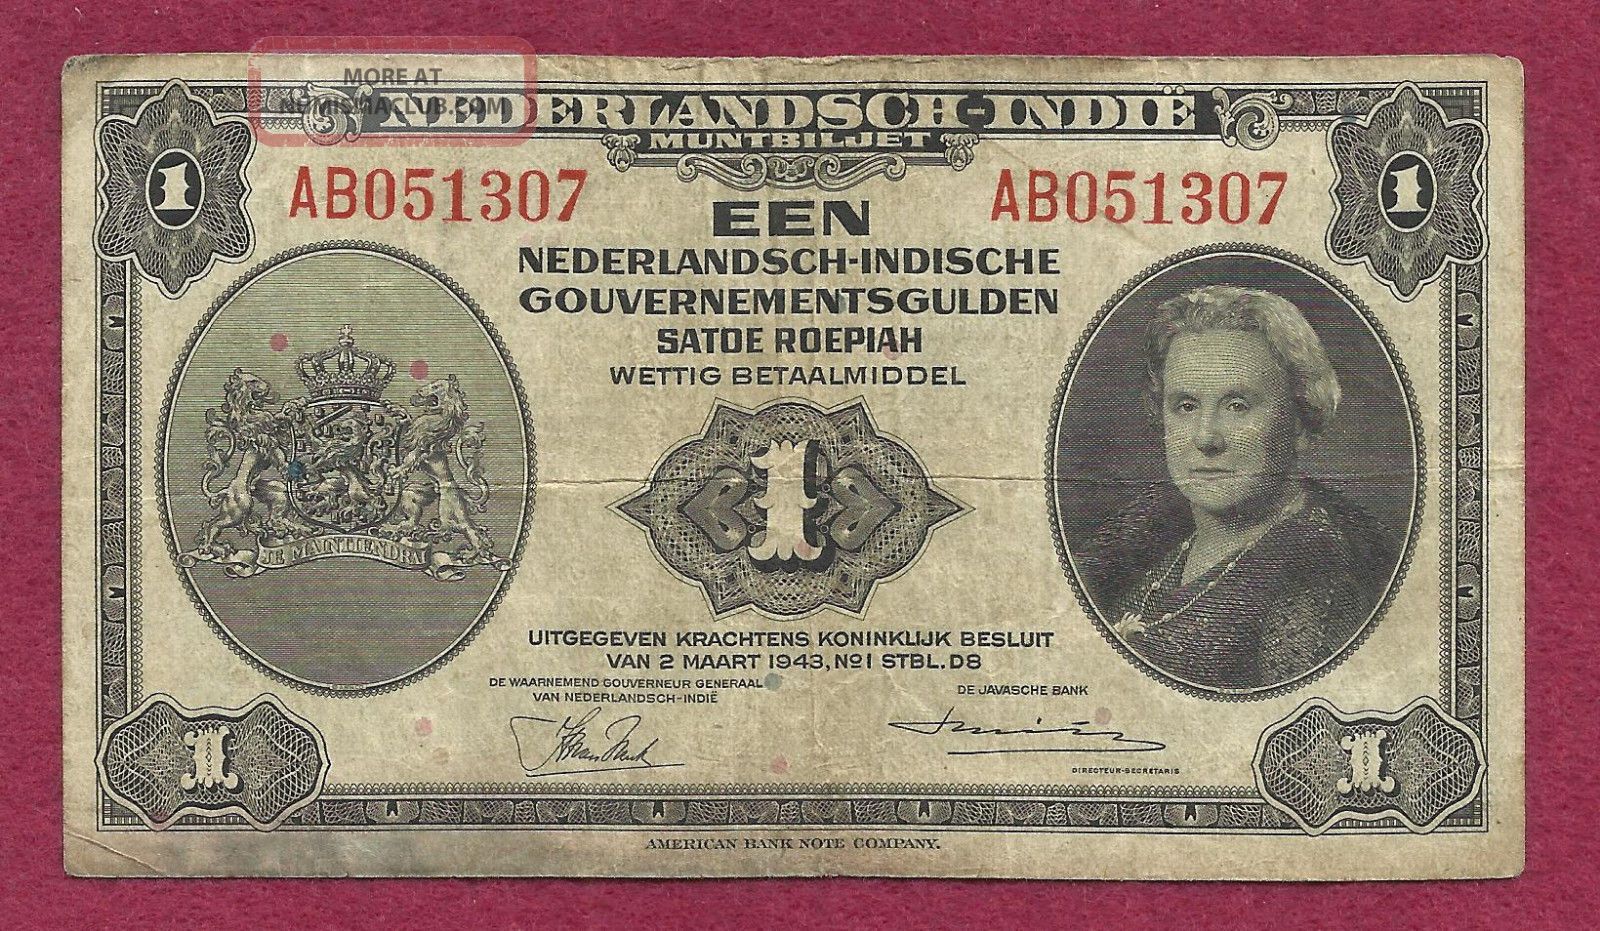 Netherlands Indies 1 Gulden 1943 Banknote Ab051307 Queen Wlhelmina Wwii Currency Europe photo